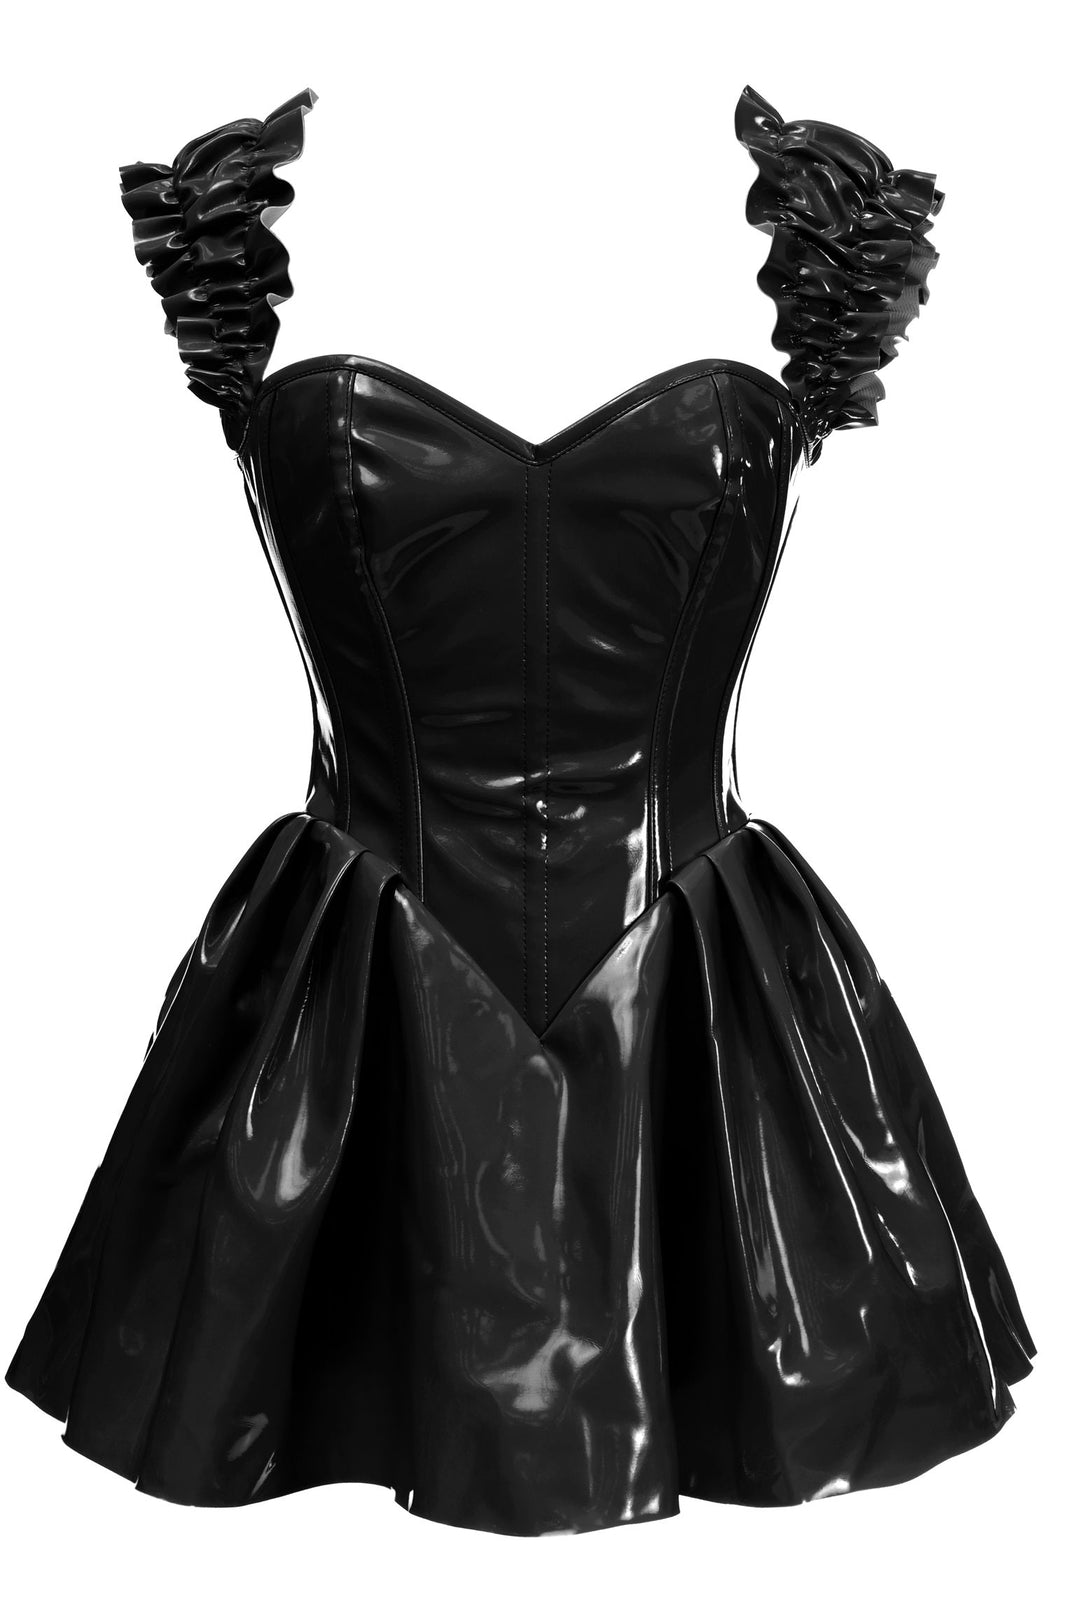 Top Drawer Steel Boned Black Patent PVC Vinyl Corset Dress